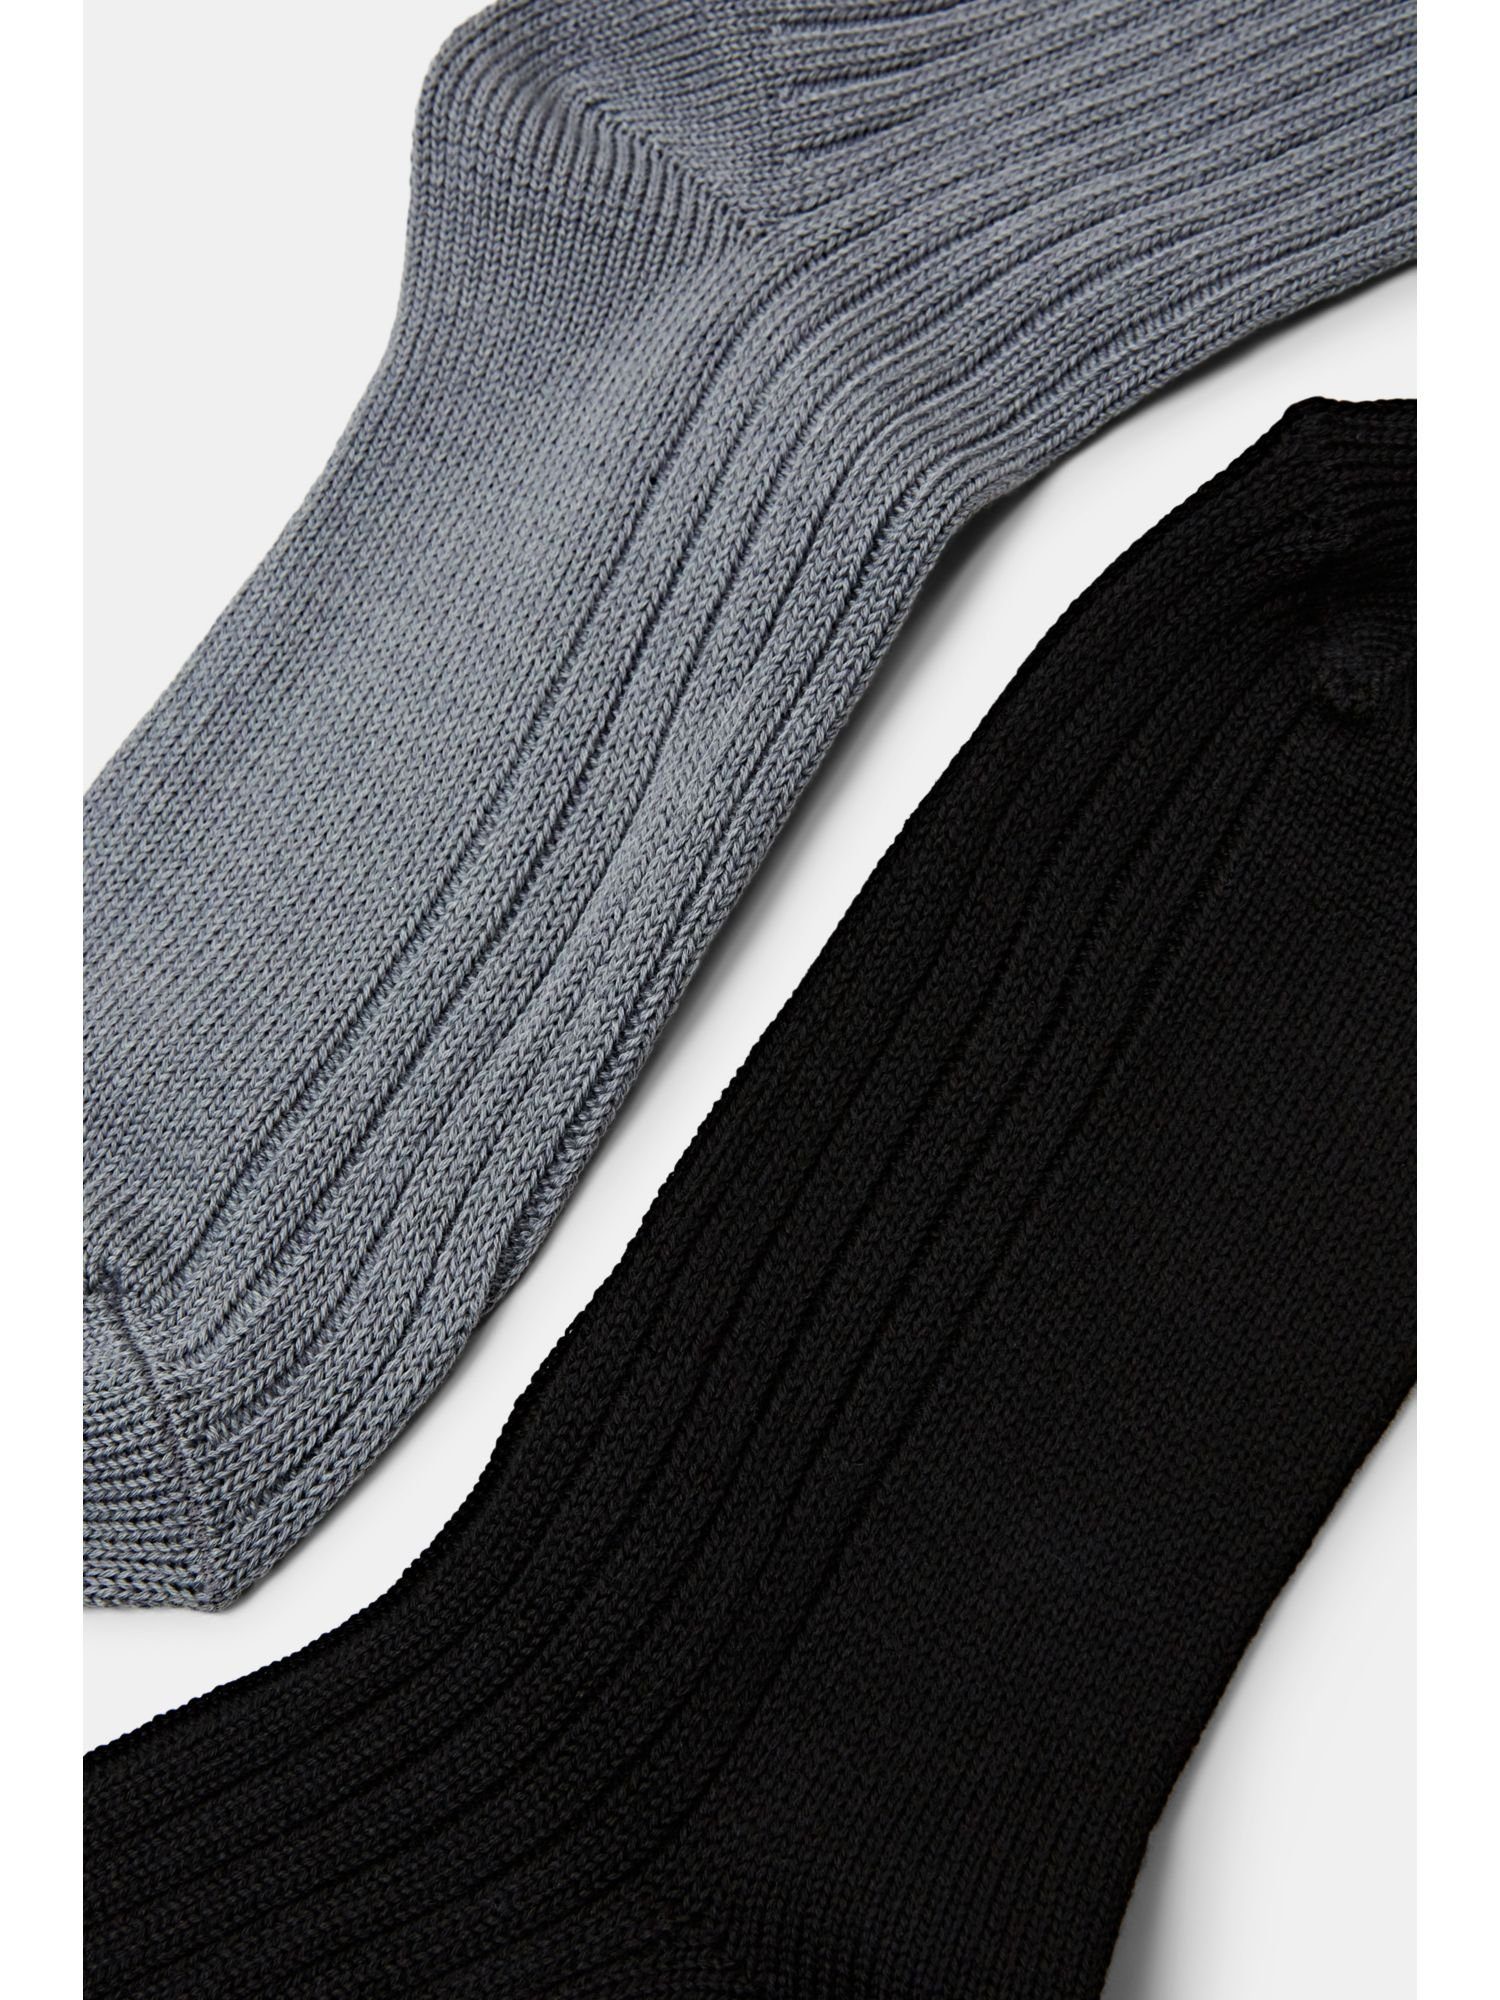 Rippstricksocken GREY/BLACK 2er-Set Socken Esprit